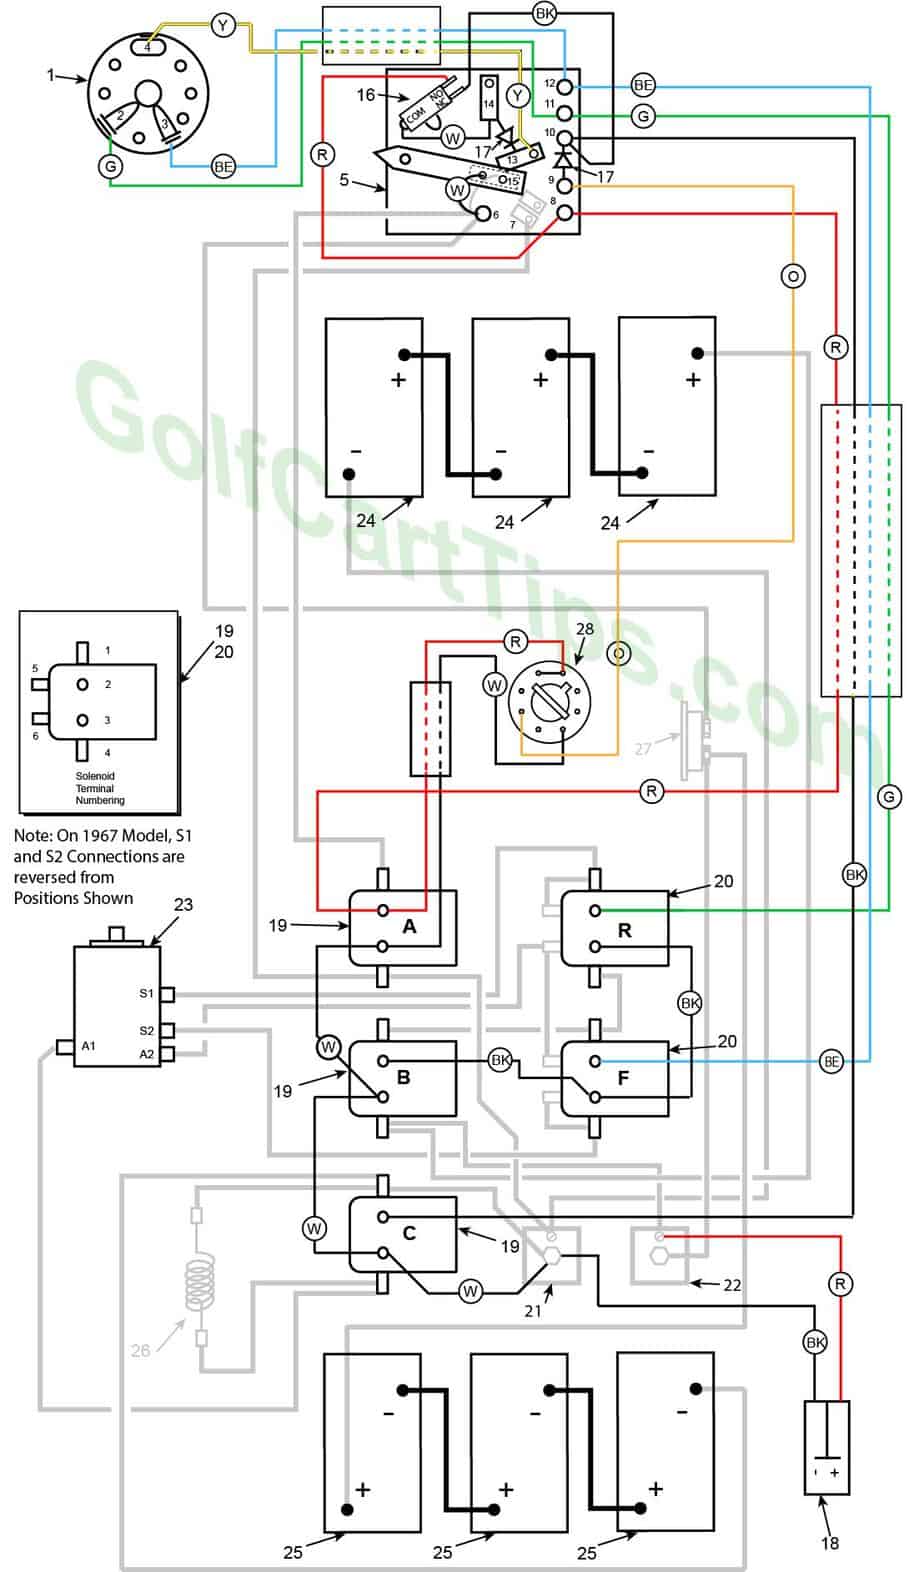 [DIAGRAM] Yamaha Ydre Wiring Diagram FULL Version HD Quality Wiring